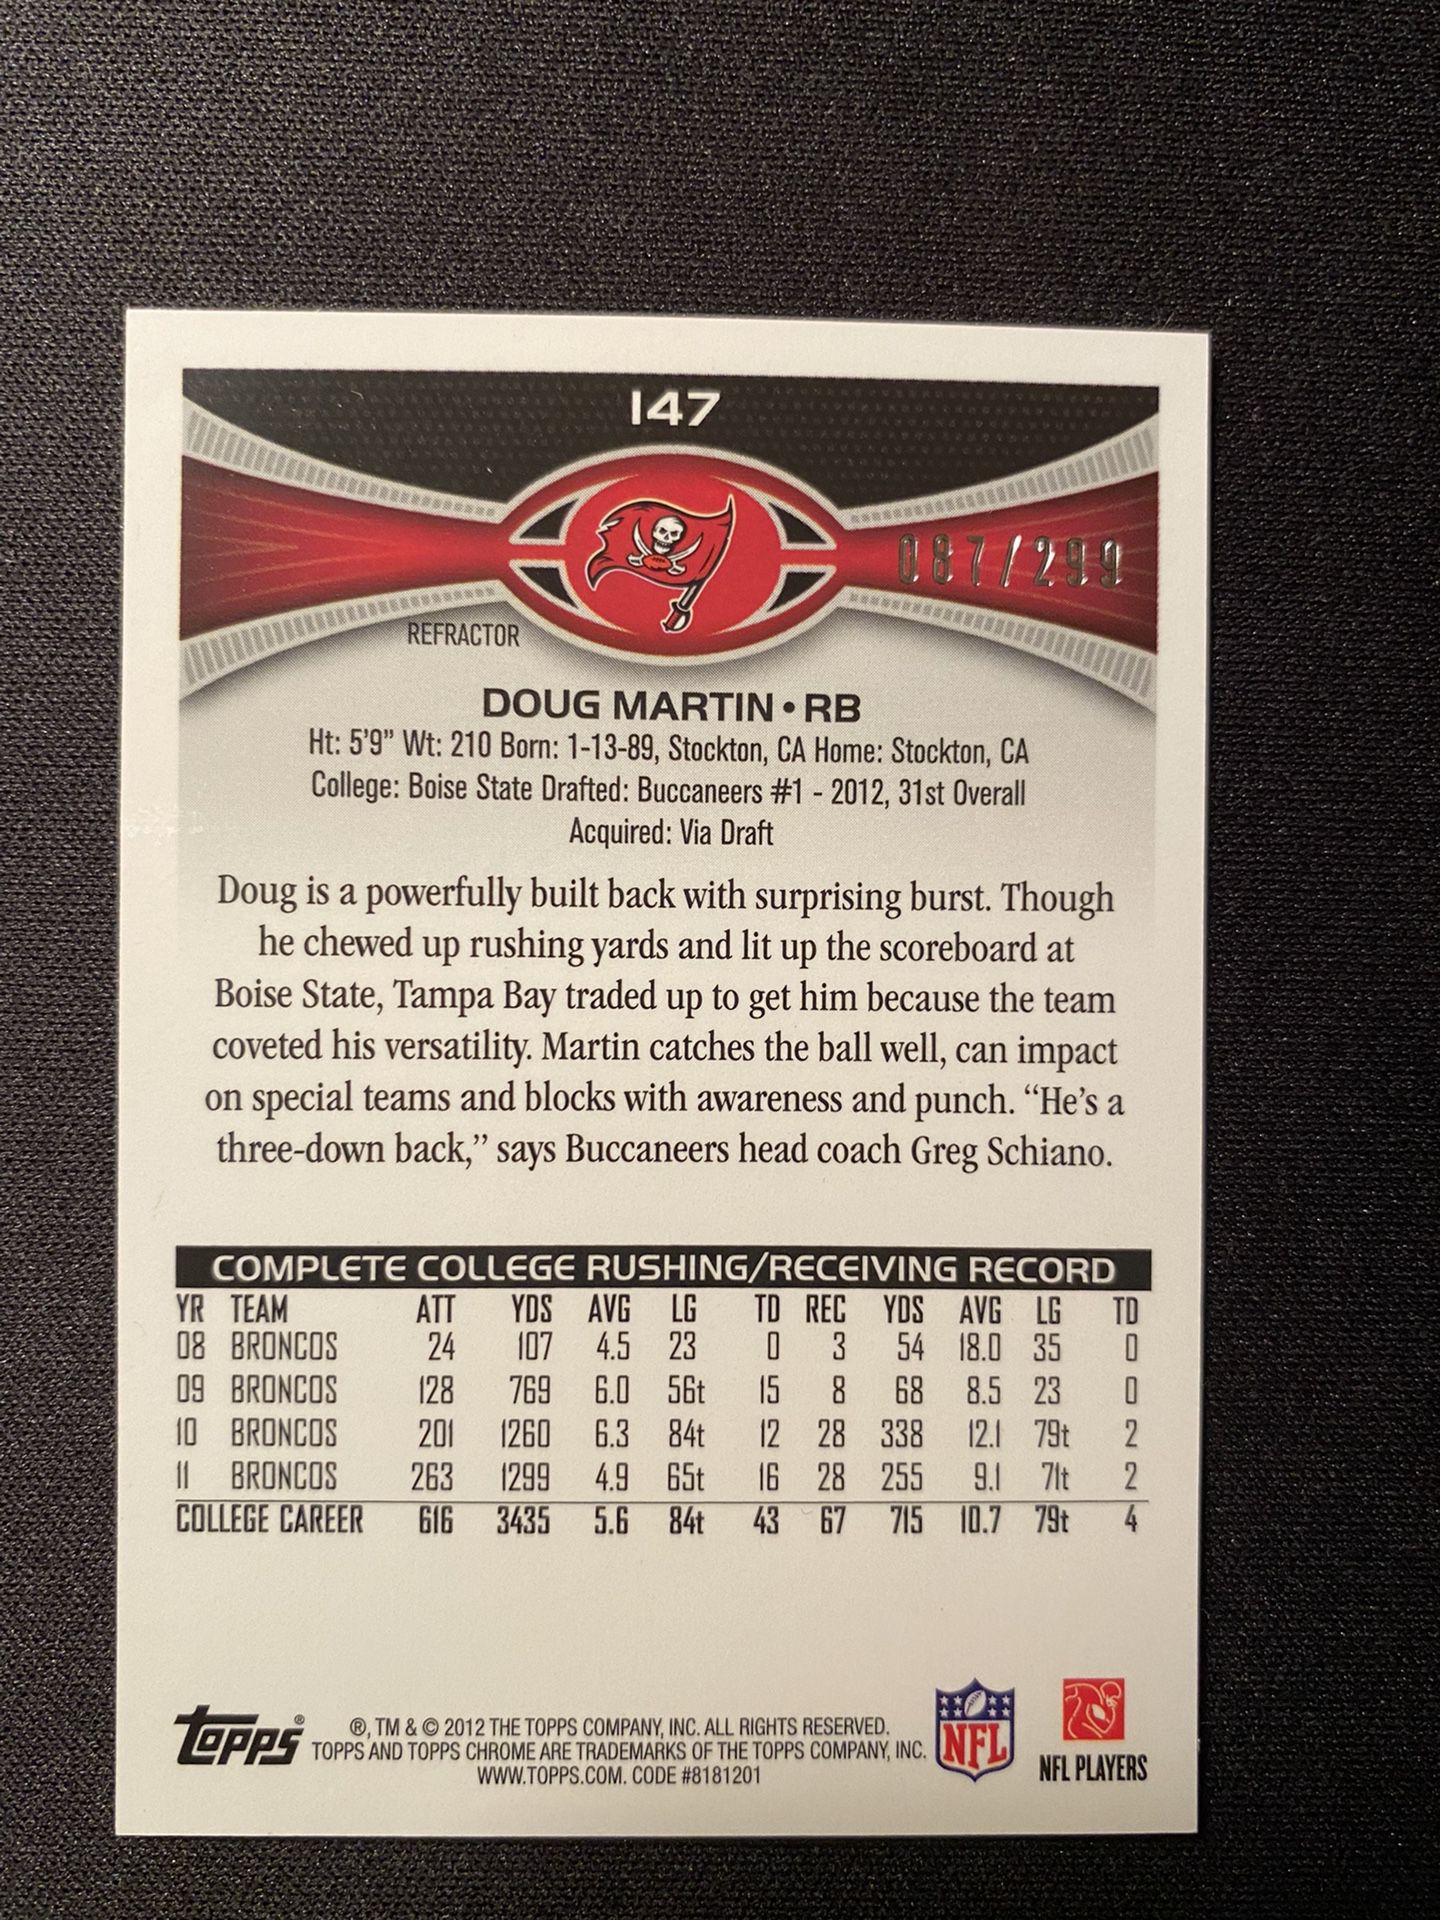 2012 Topps Chrome Doug Martin Black Refractor Rookie Card 87/299 #147